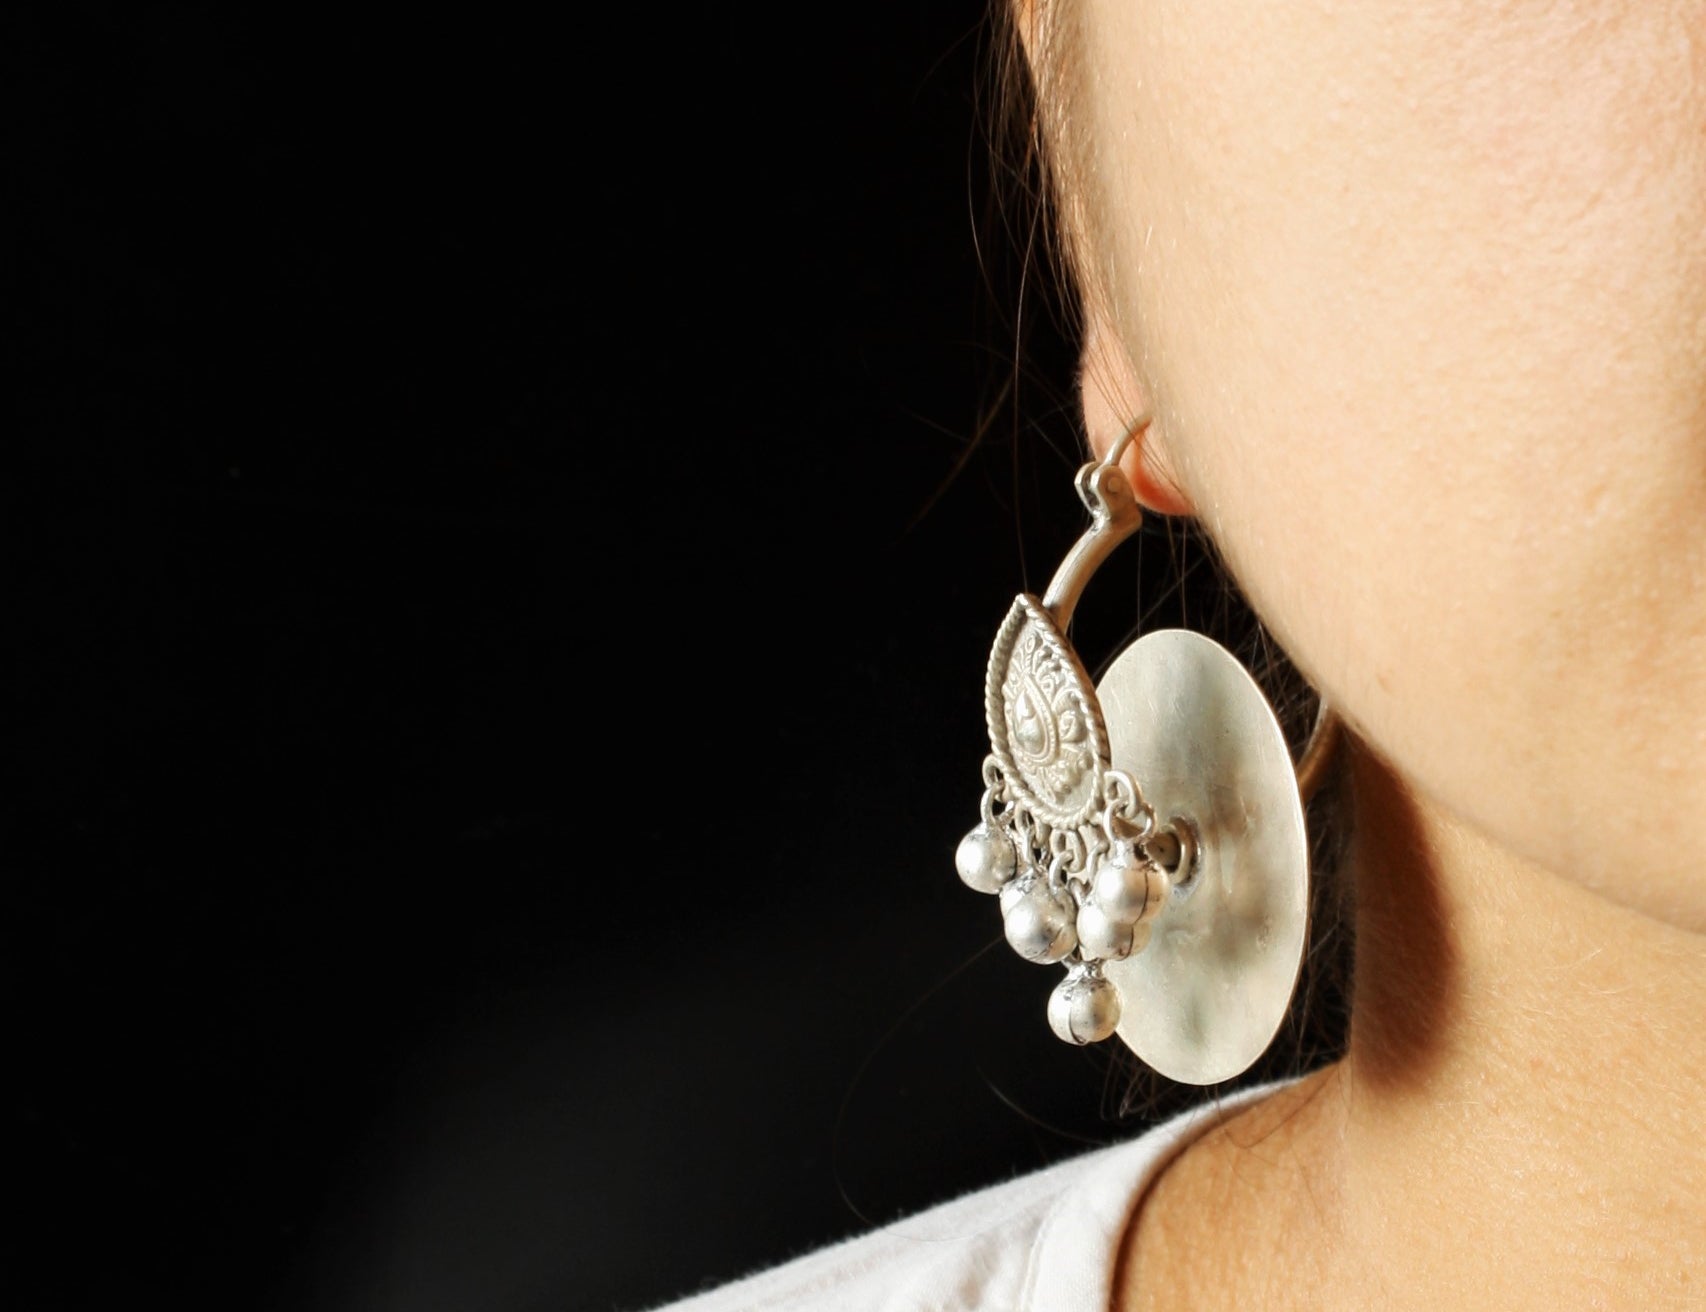 Buy Trendy Silver Earrings Online in India - Gramophone Earrings - Quirksmith